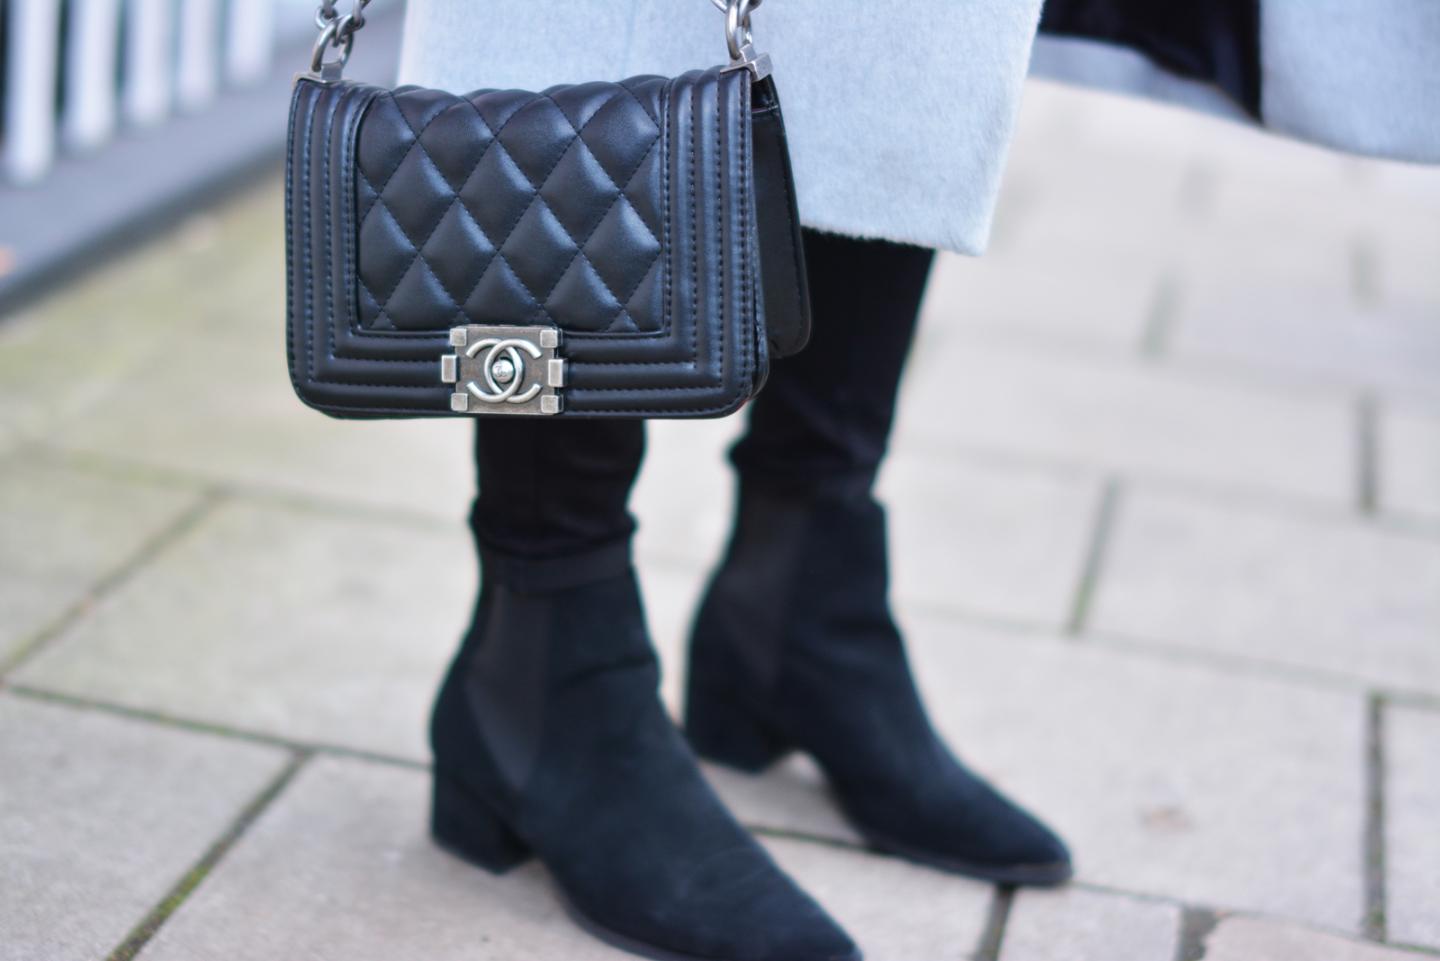 EJSTYLE - Black Chanel boy bag handbag silver hardware, black pointed toe ankle boots